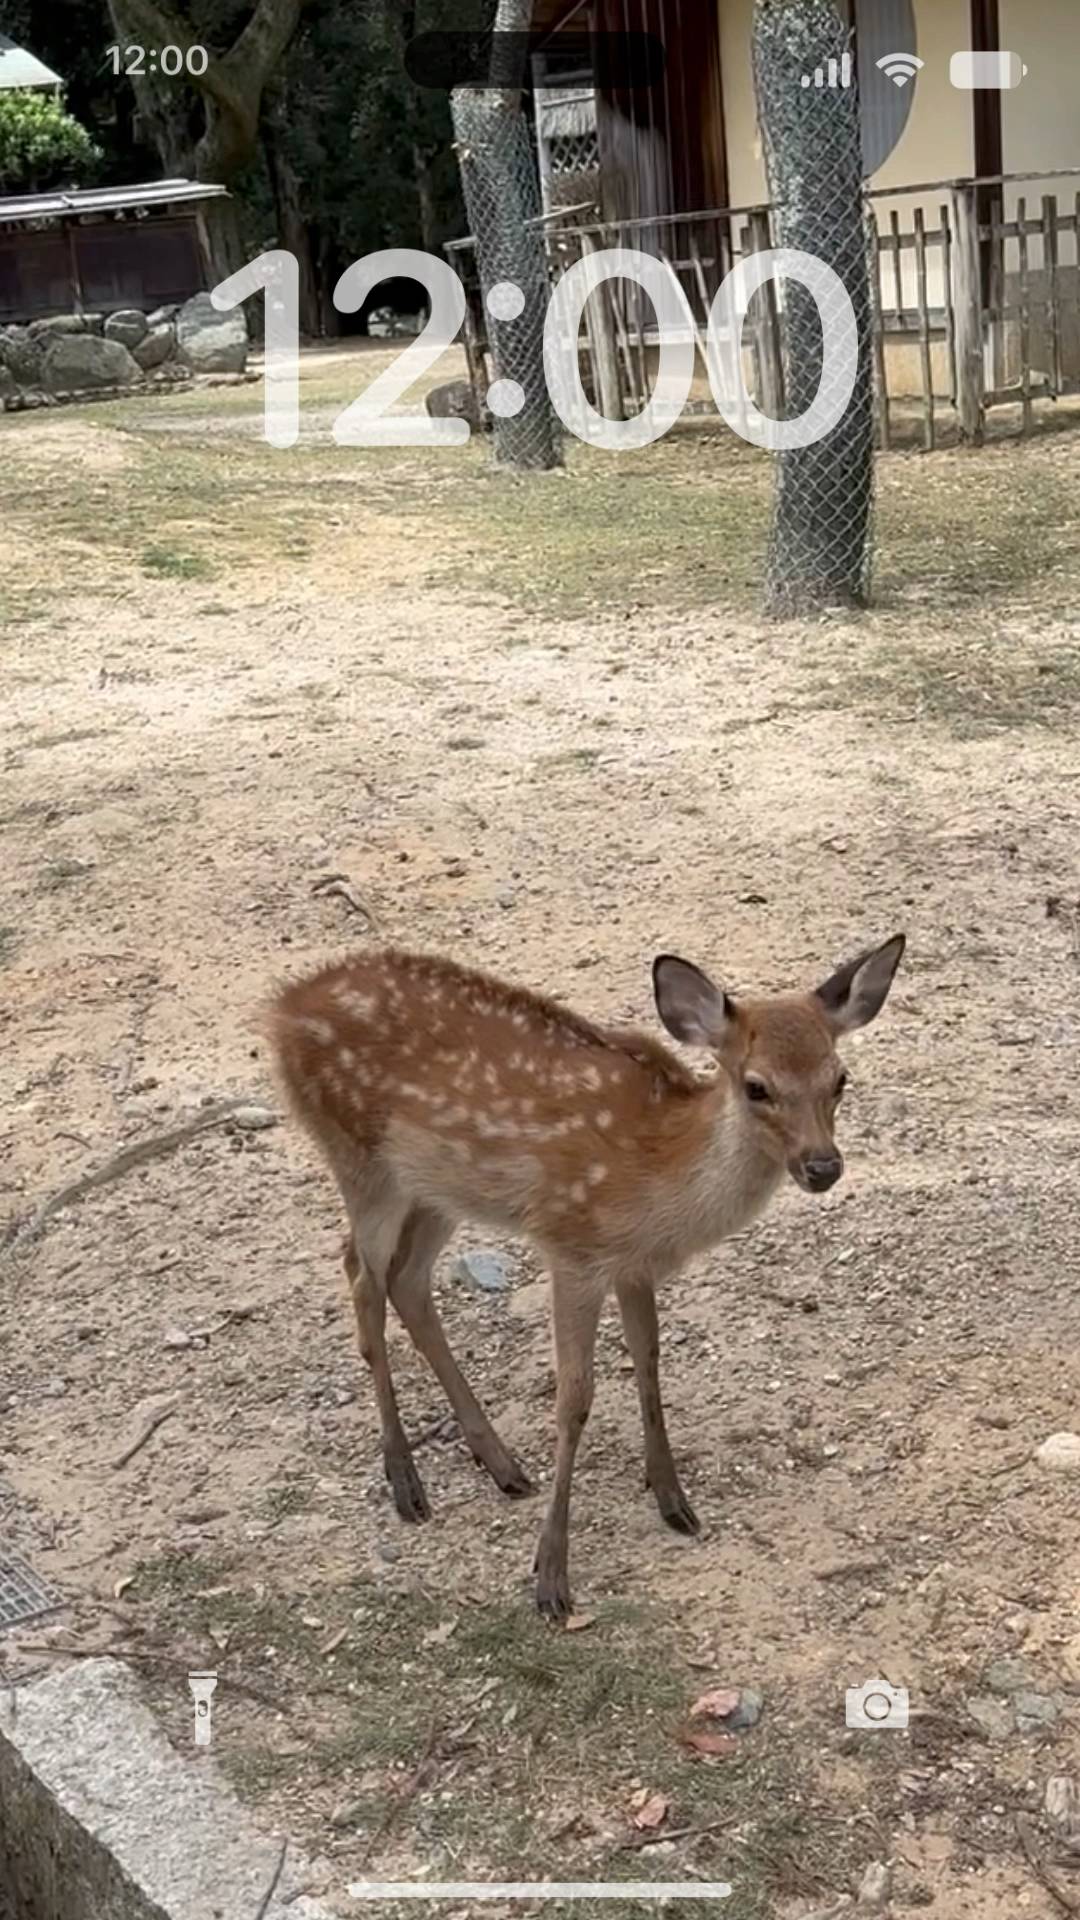 Nara cute deer 🦌🍁 Live Wallpaper[ltE2WDsbyYP7yruGvDEu]